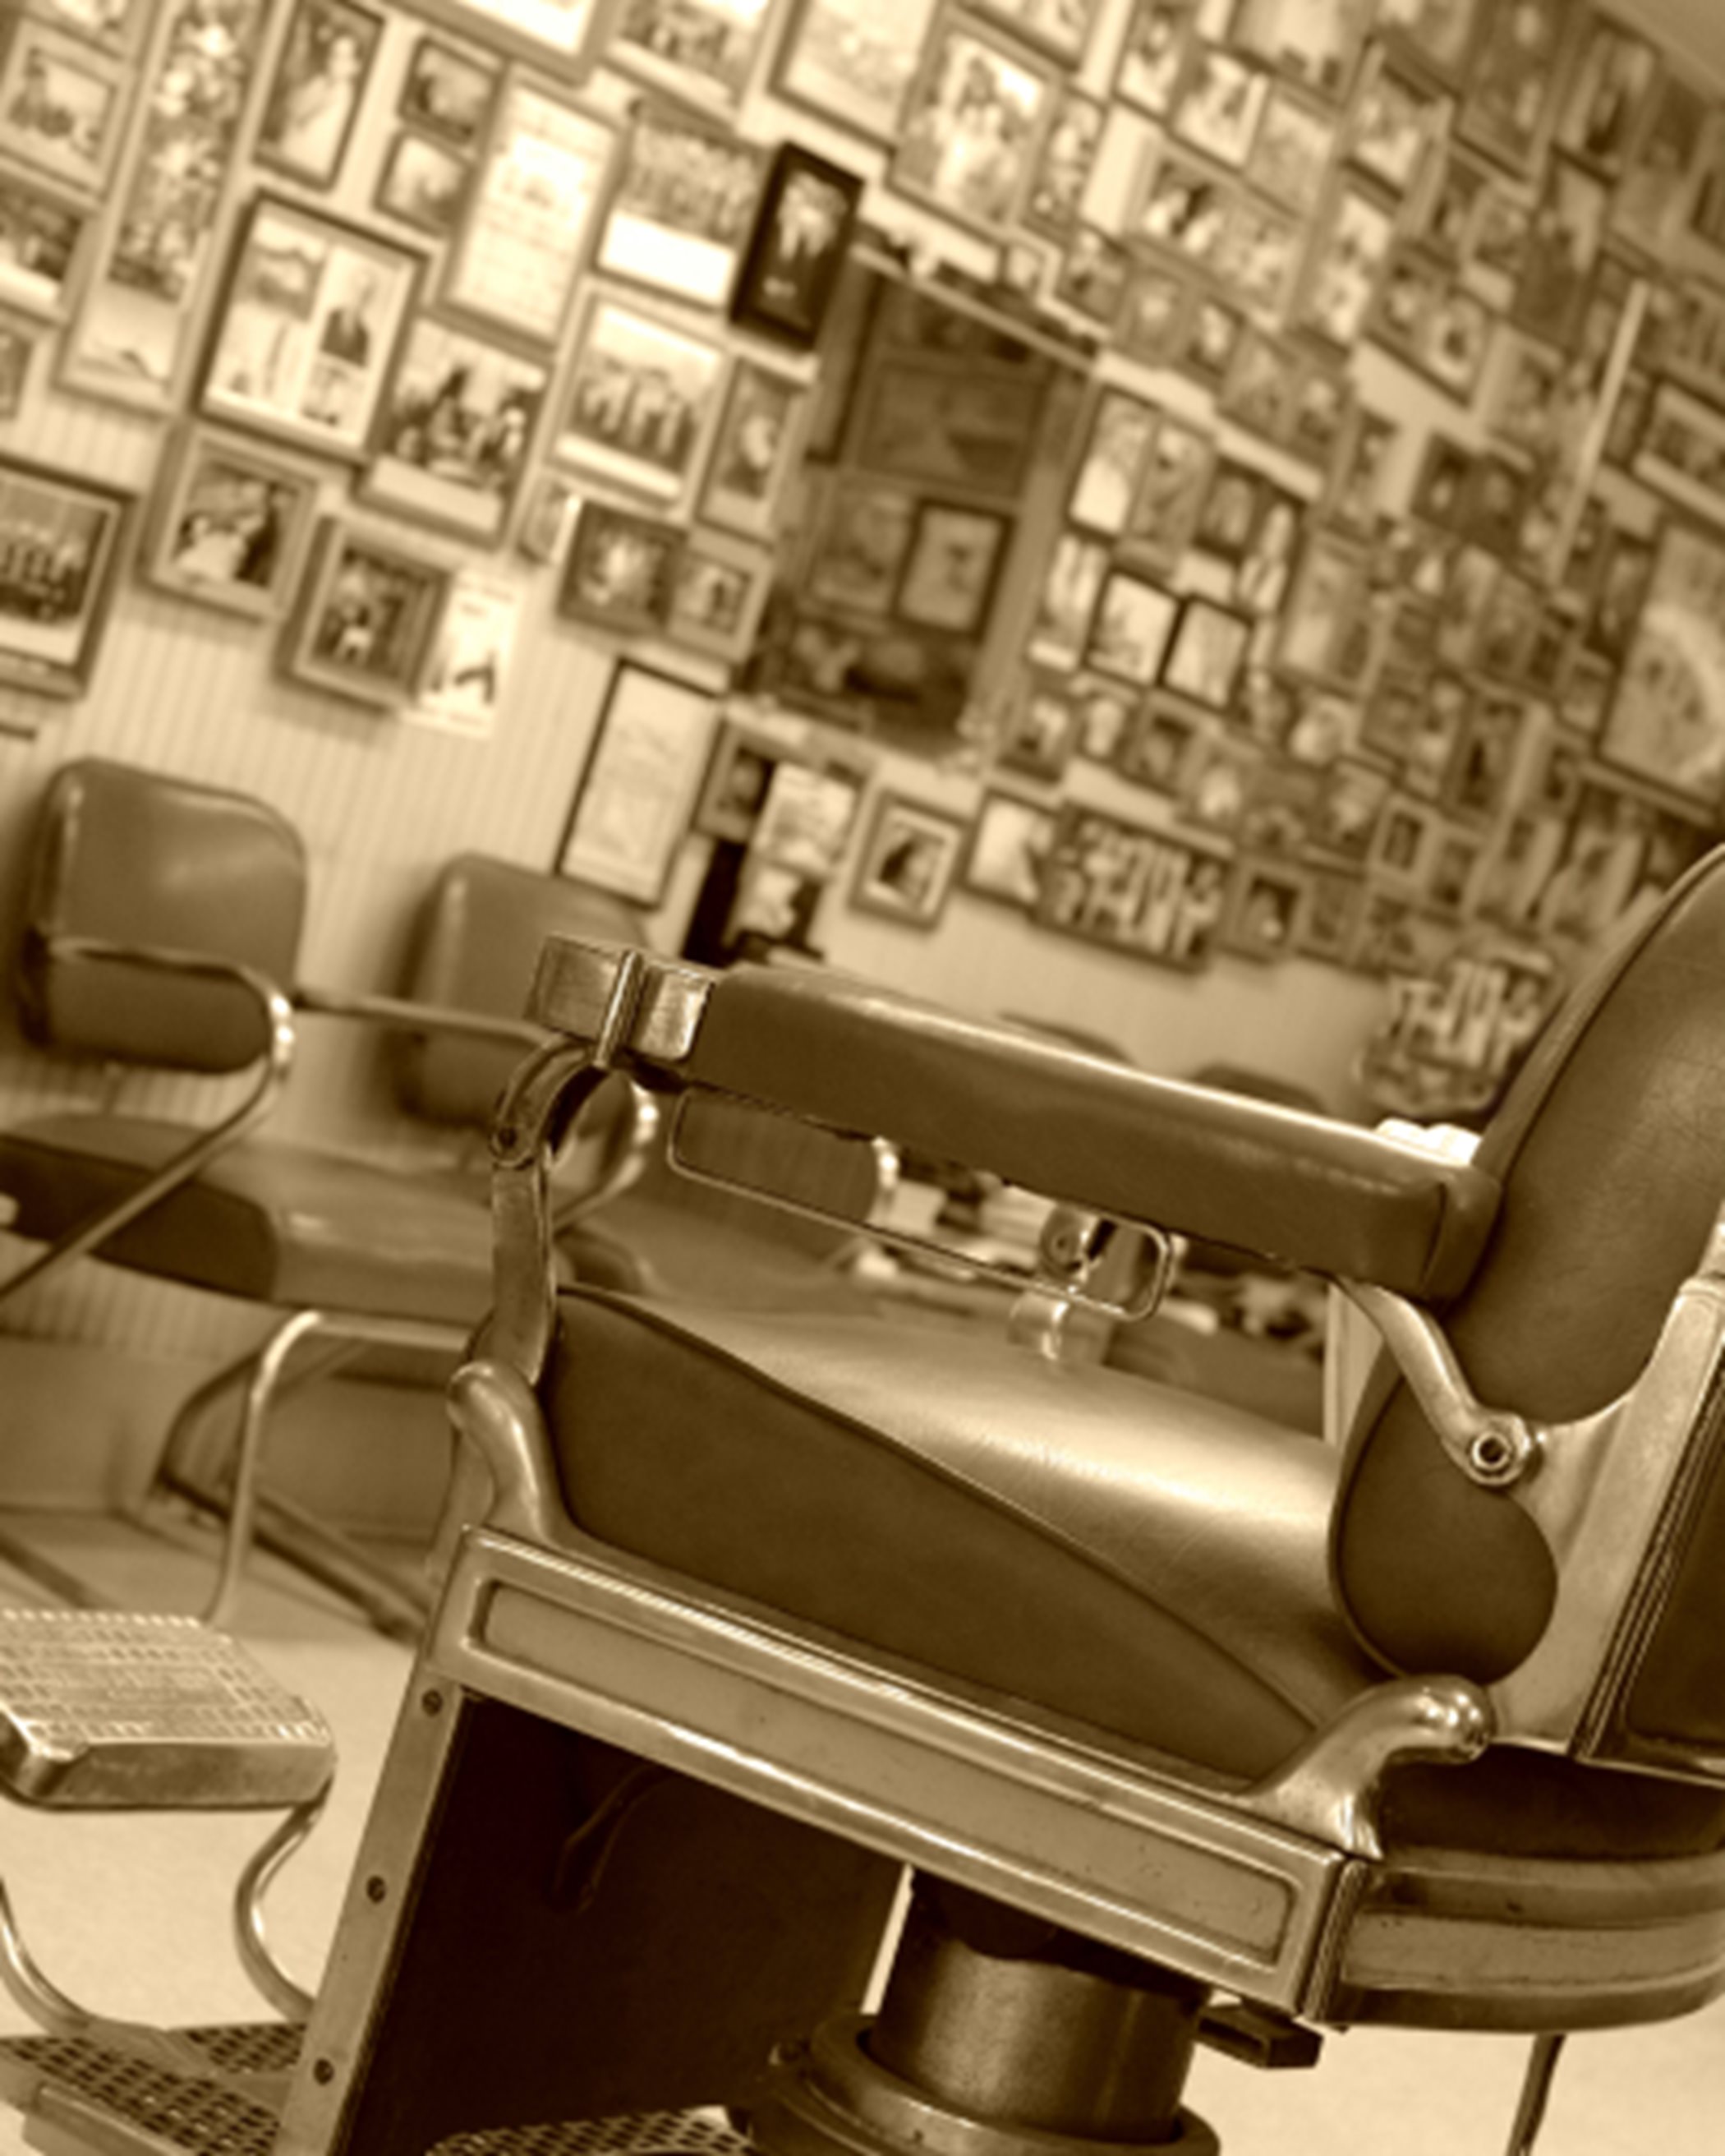 A barbershop chair